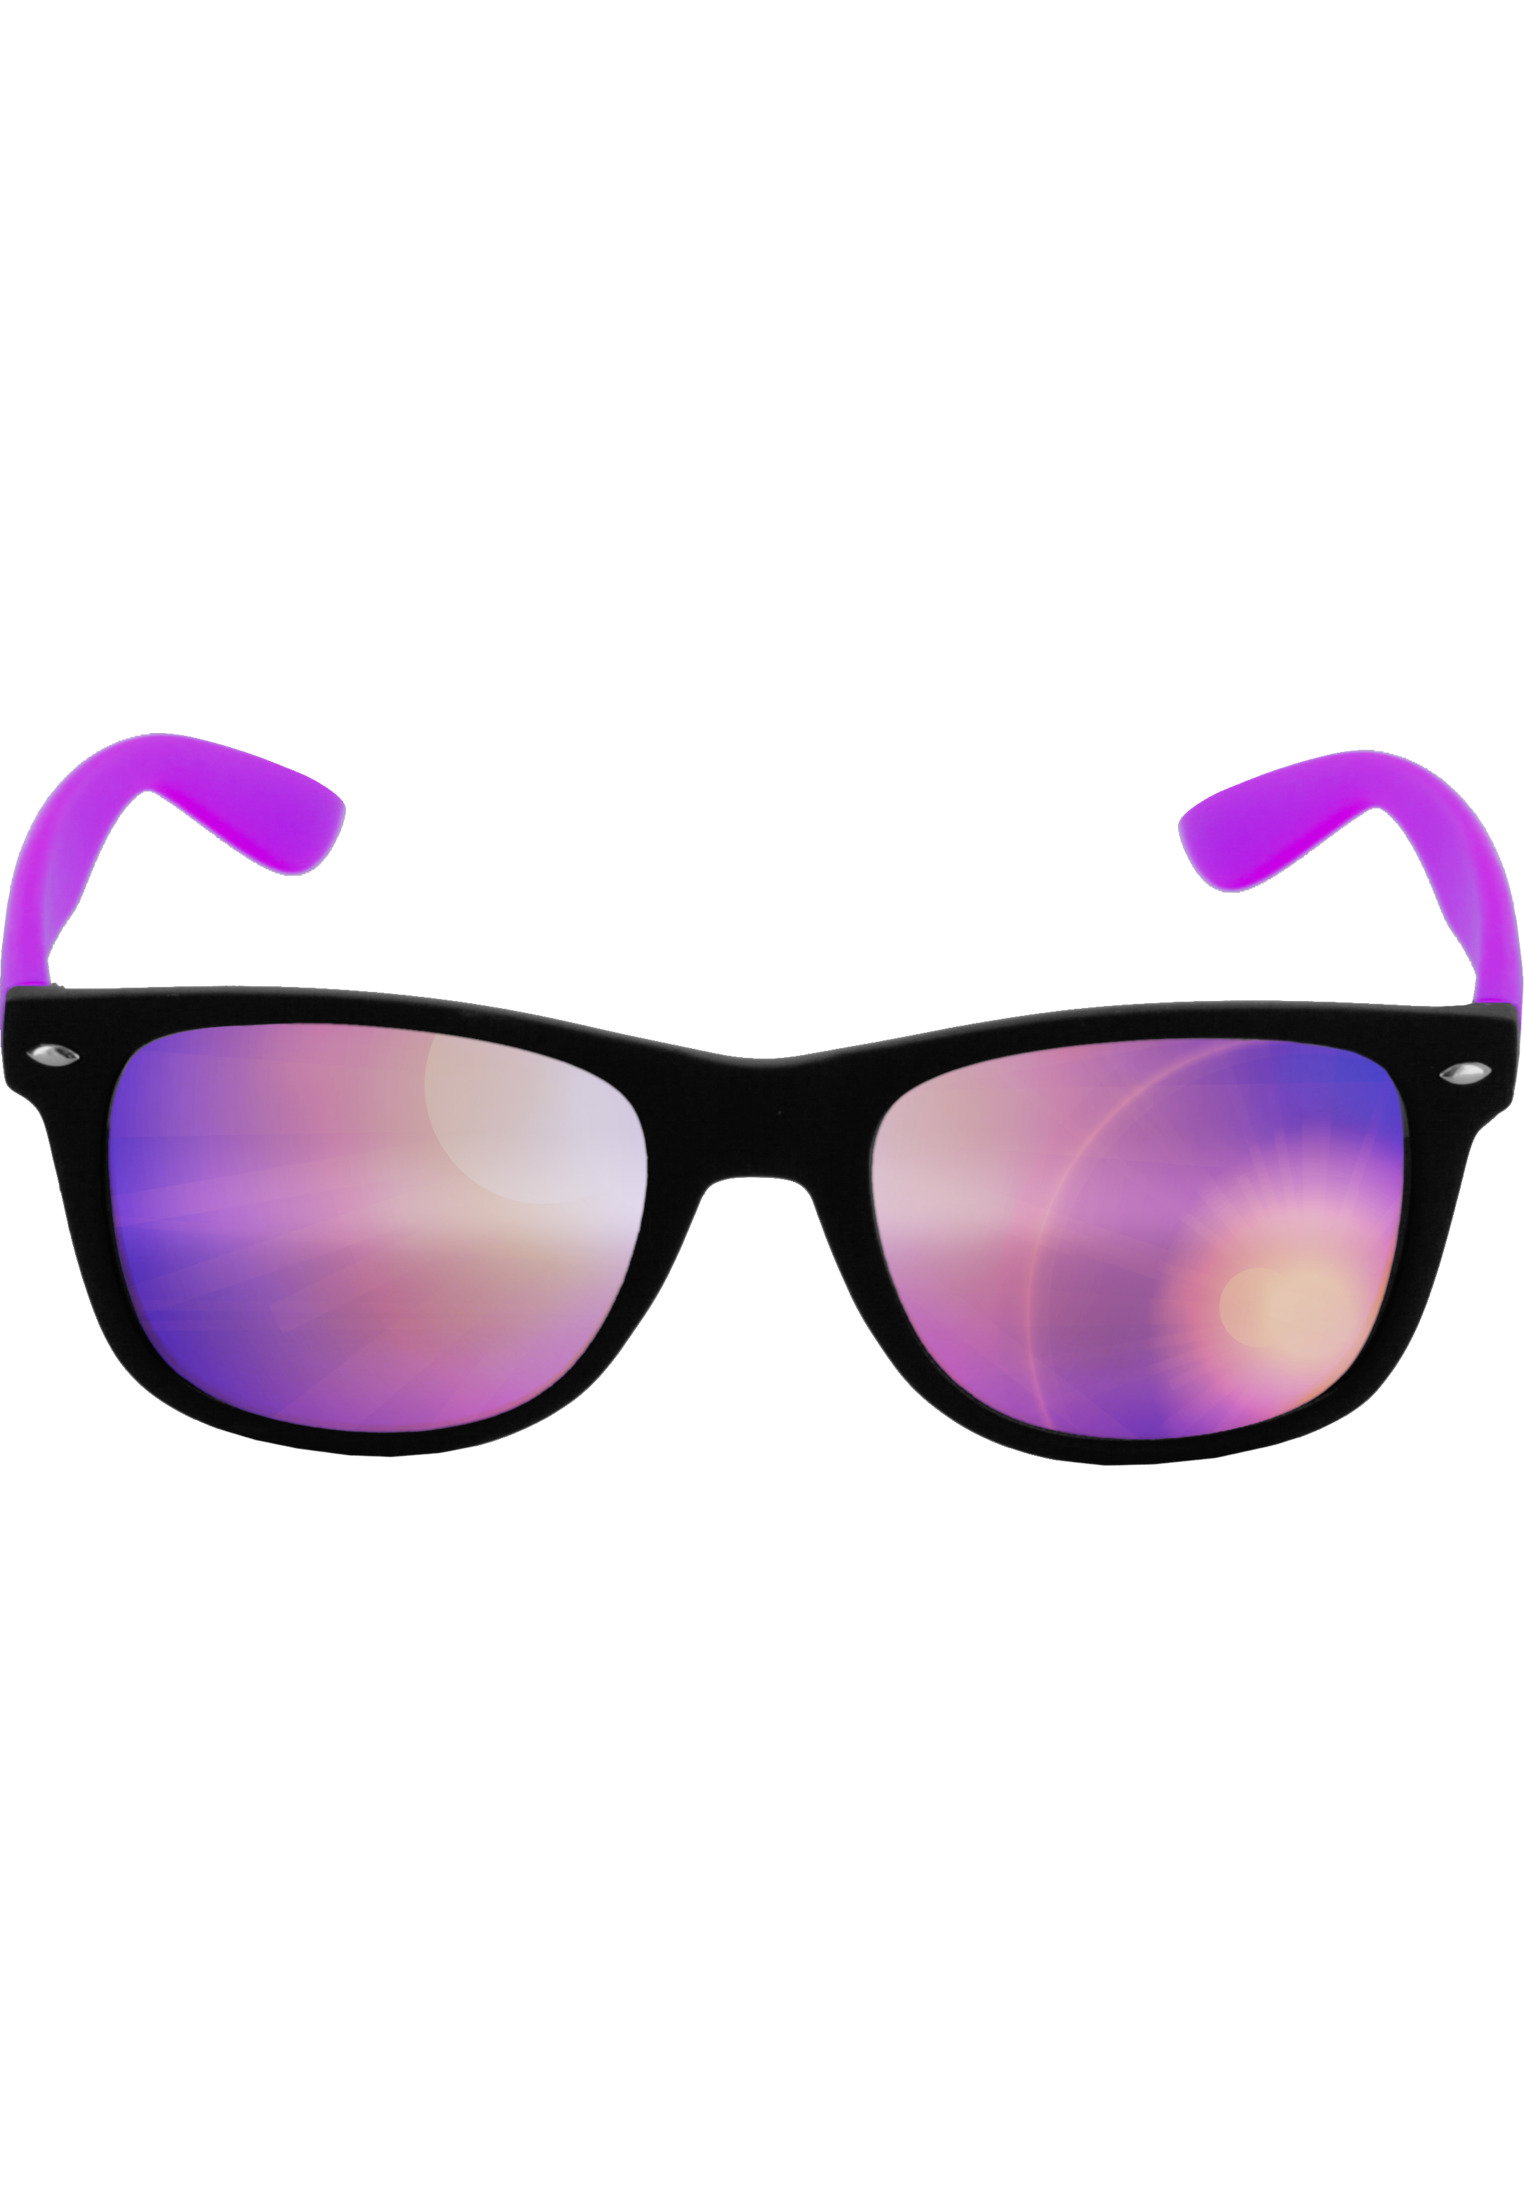 Likoma Mirror blk/pur/pur sunglasses